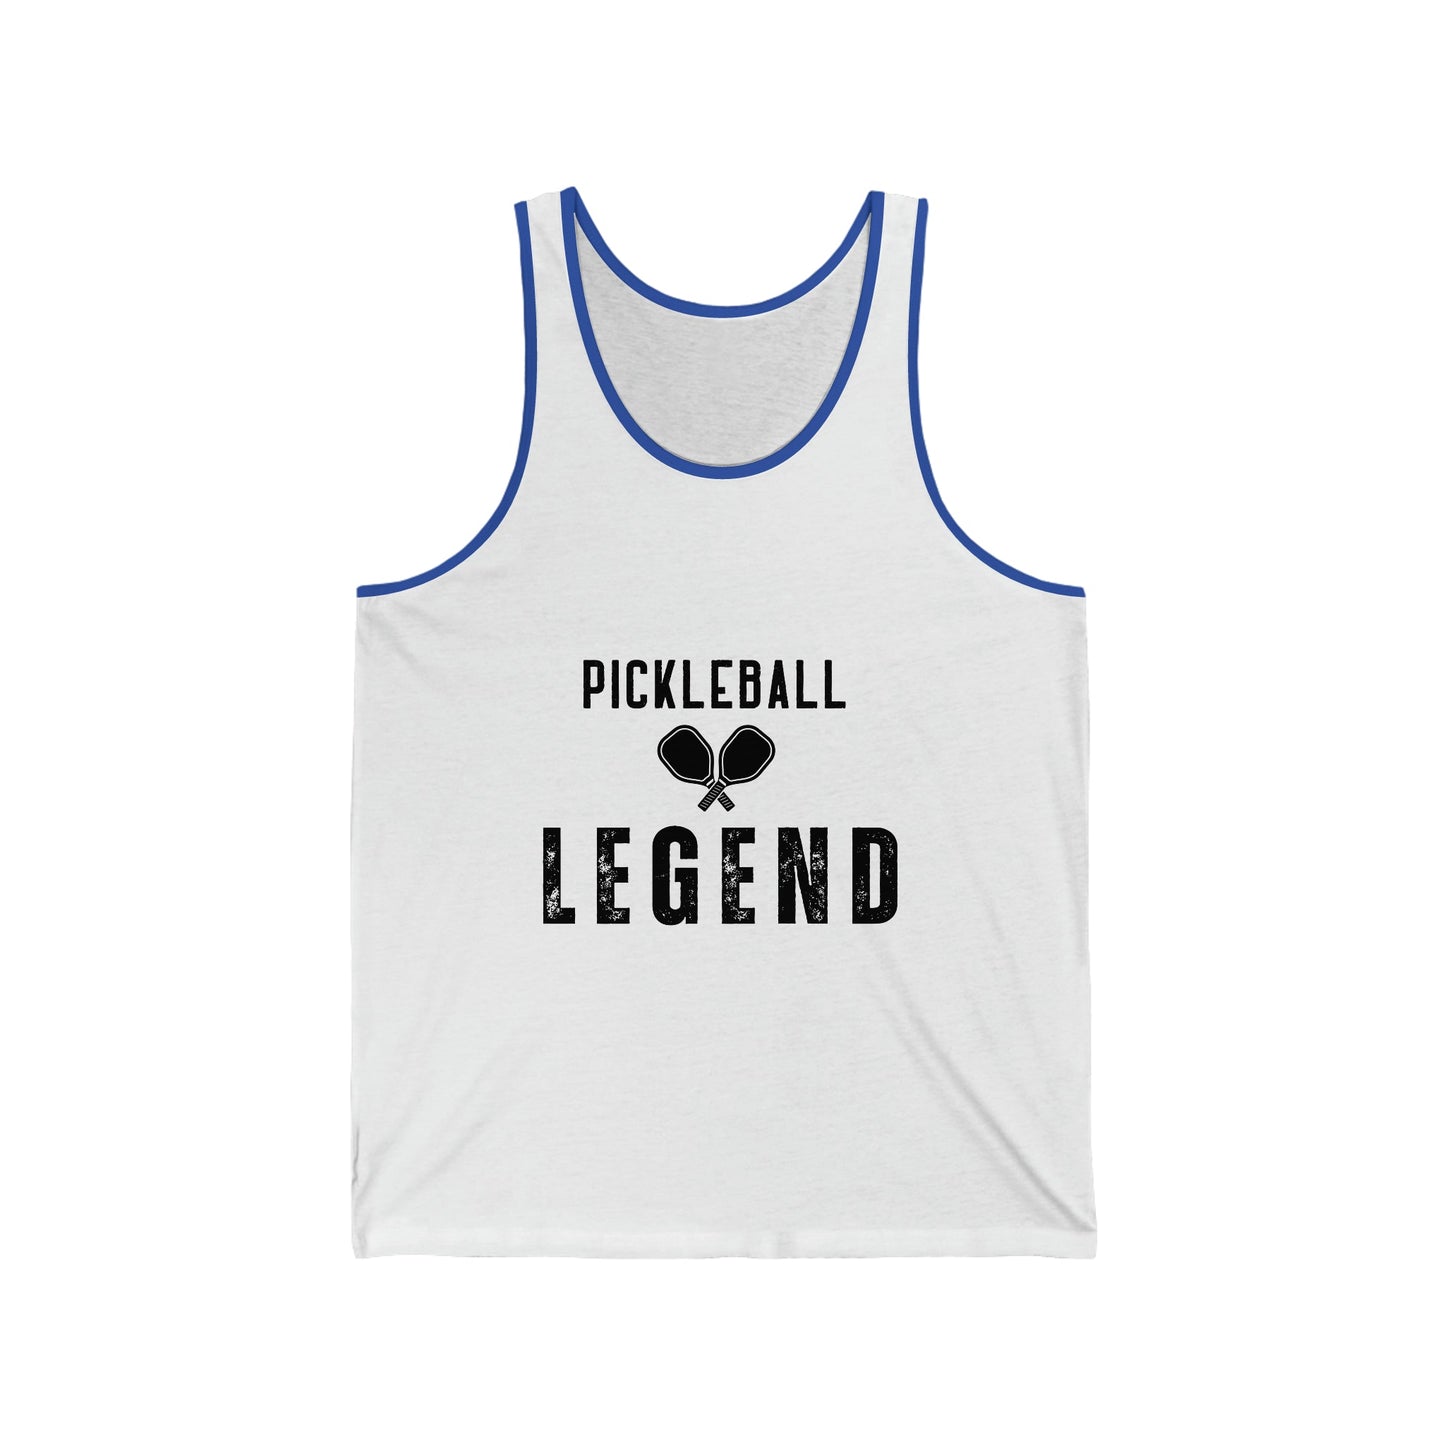 'Pickleball Legend' Tank Top